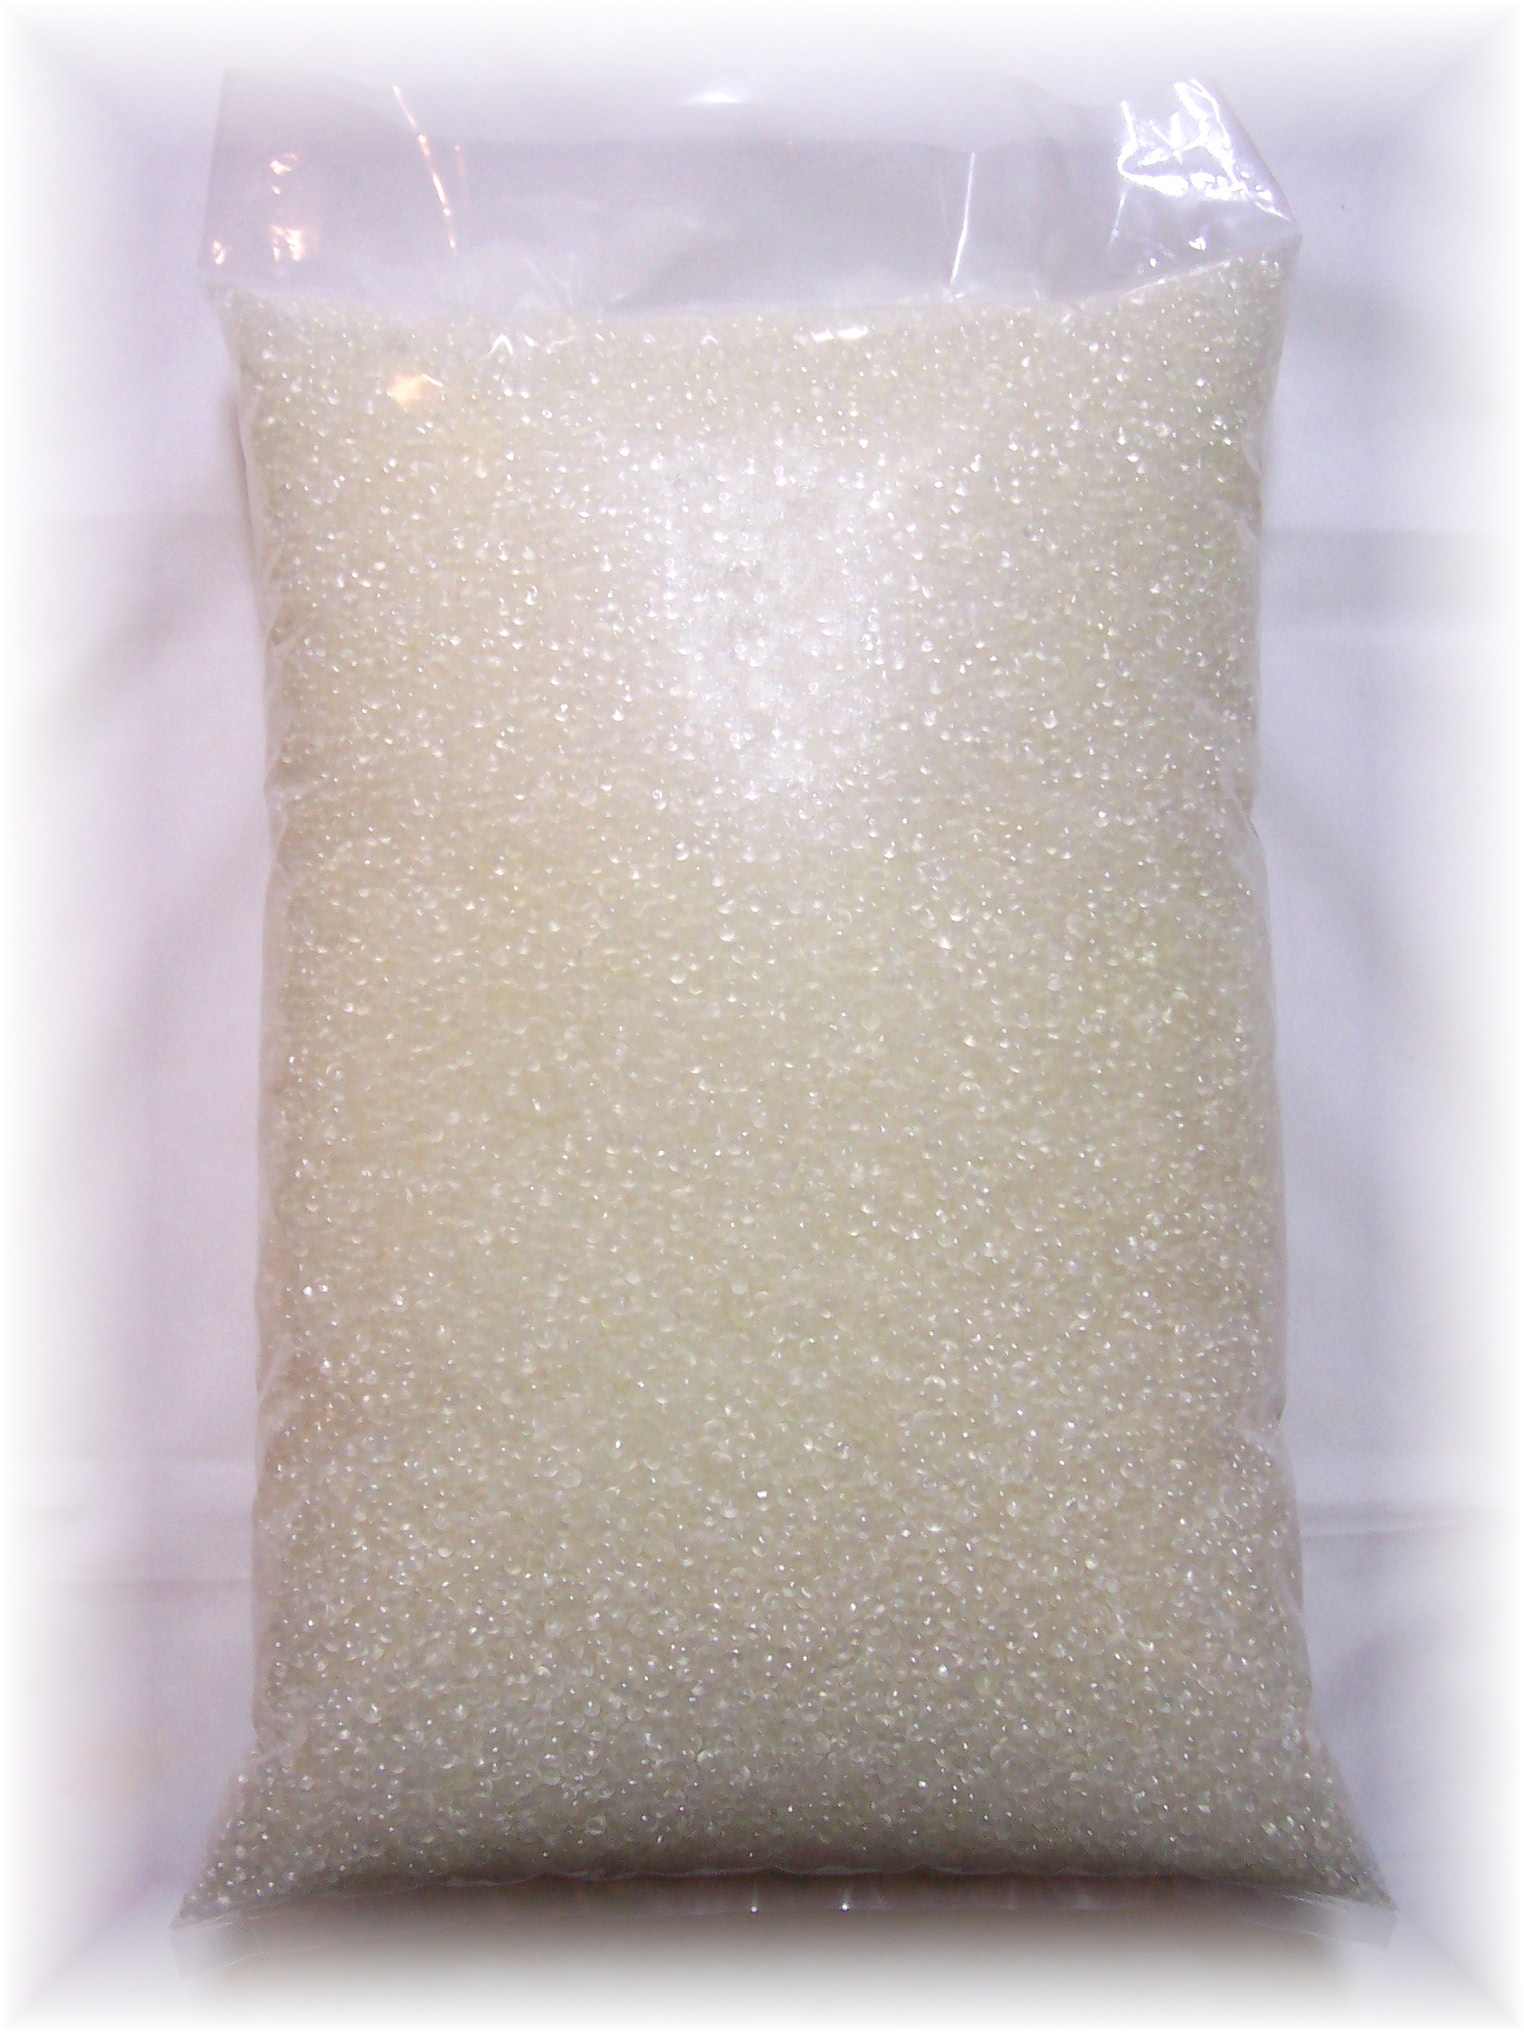 Scented Aroma Beads 5 lb. Bulk Bag Aroma Beads 5 lb. Bag Bulk Fragrance  Beads for making sachets Scented Beads [AB5LBB] - $71.24 : Aroma Beads, Fragrance Oil